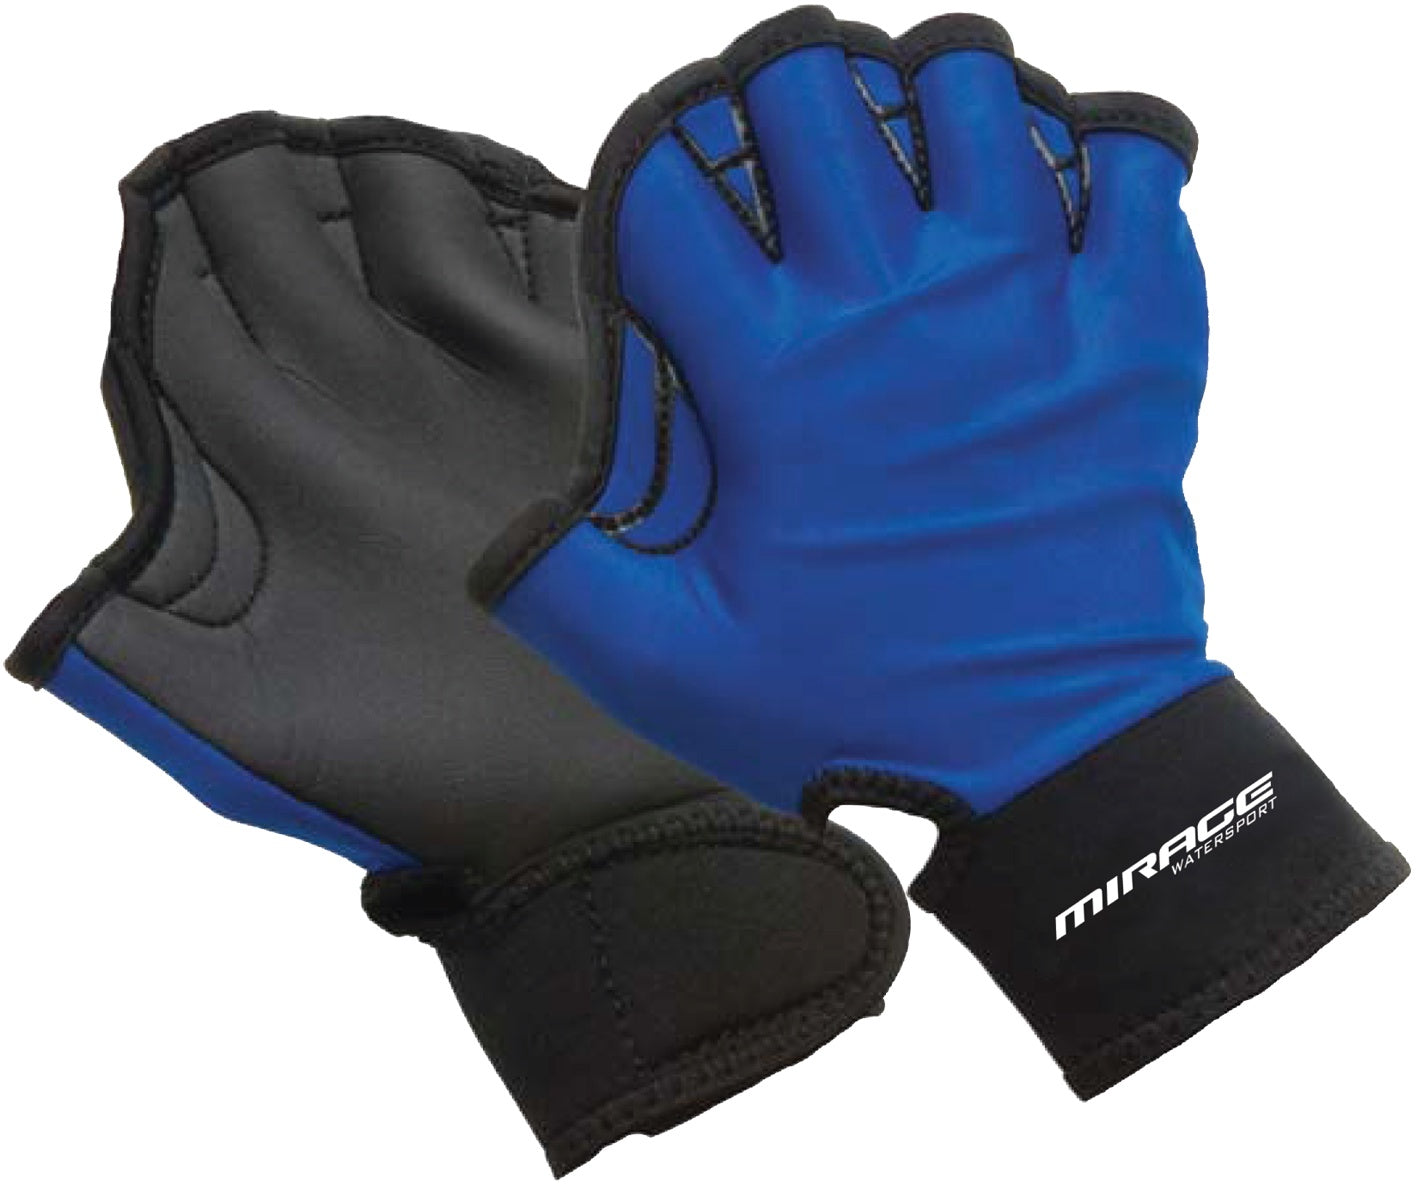 Mirage Swim Training Gloves